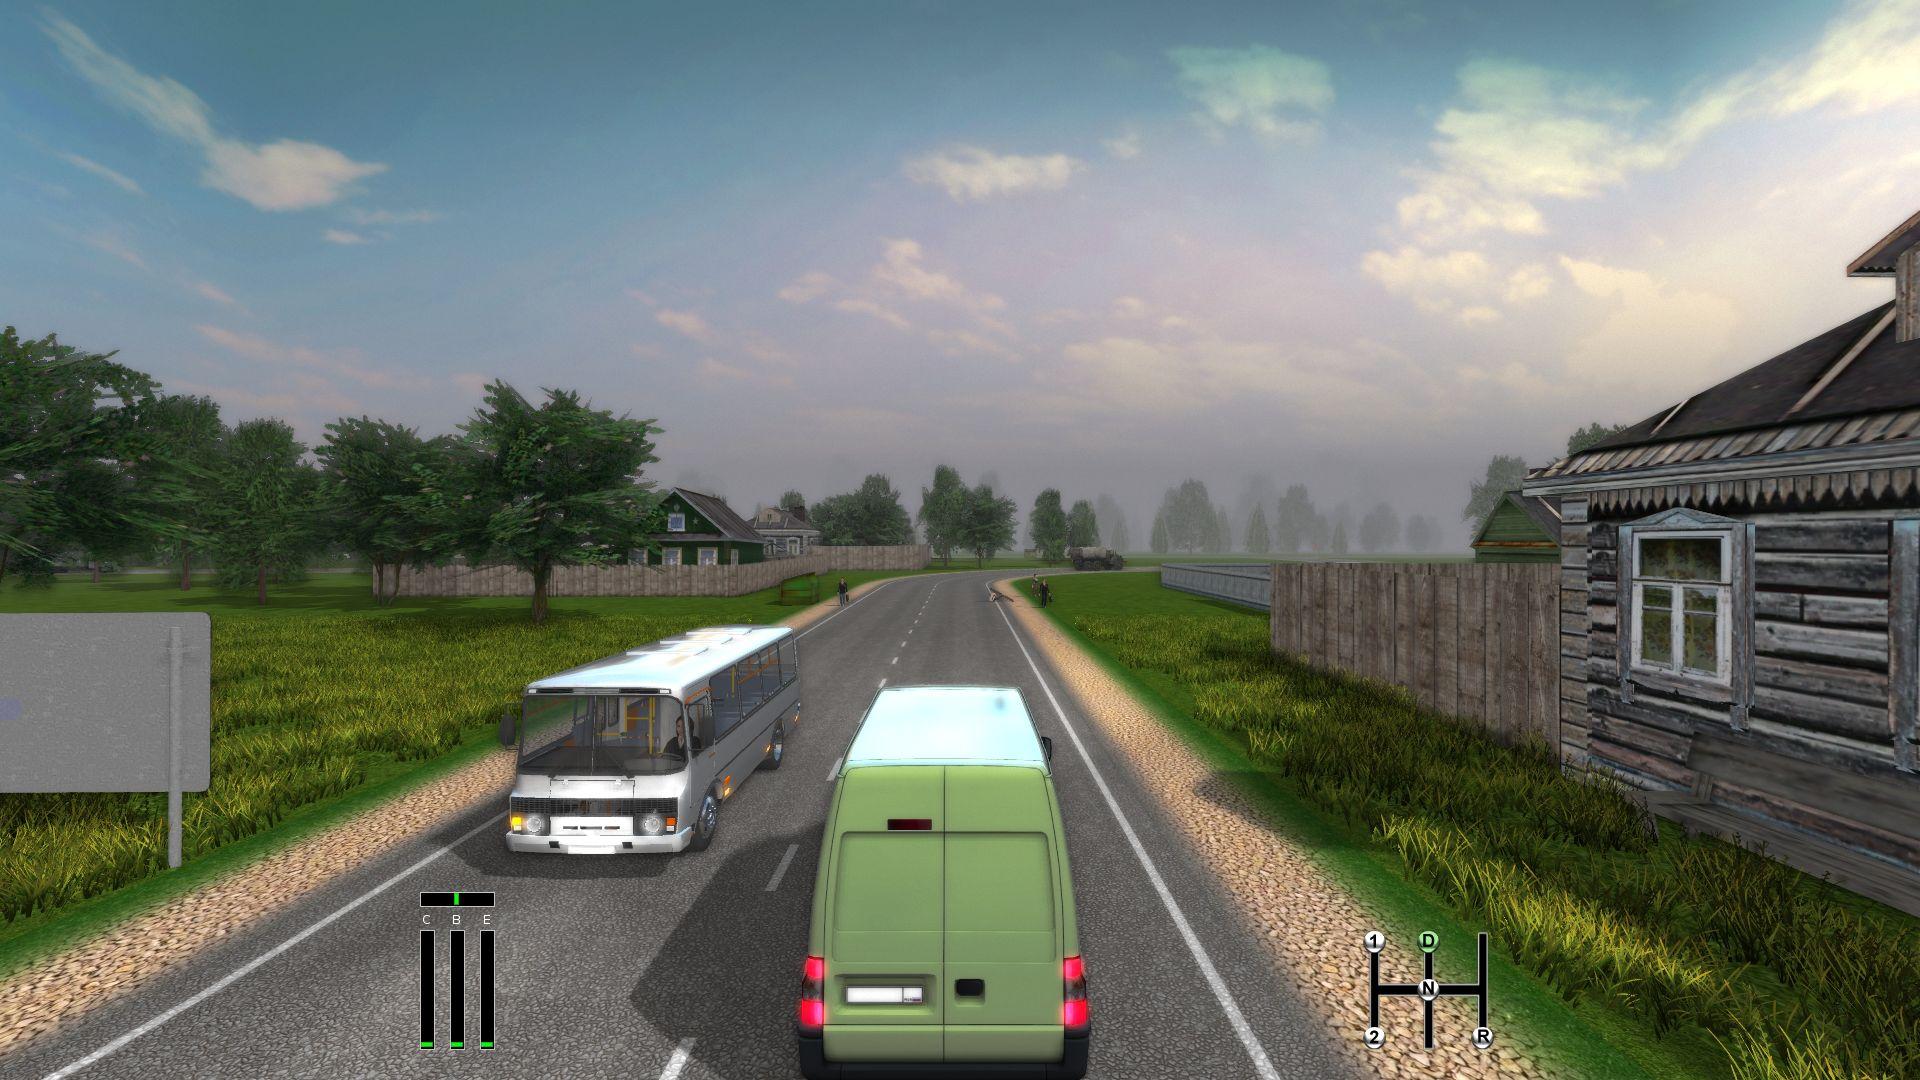 Screenshot №9 from game Drive Megapolis